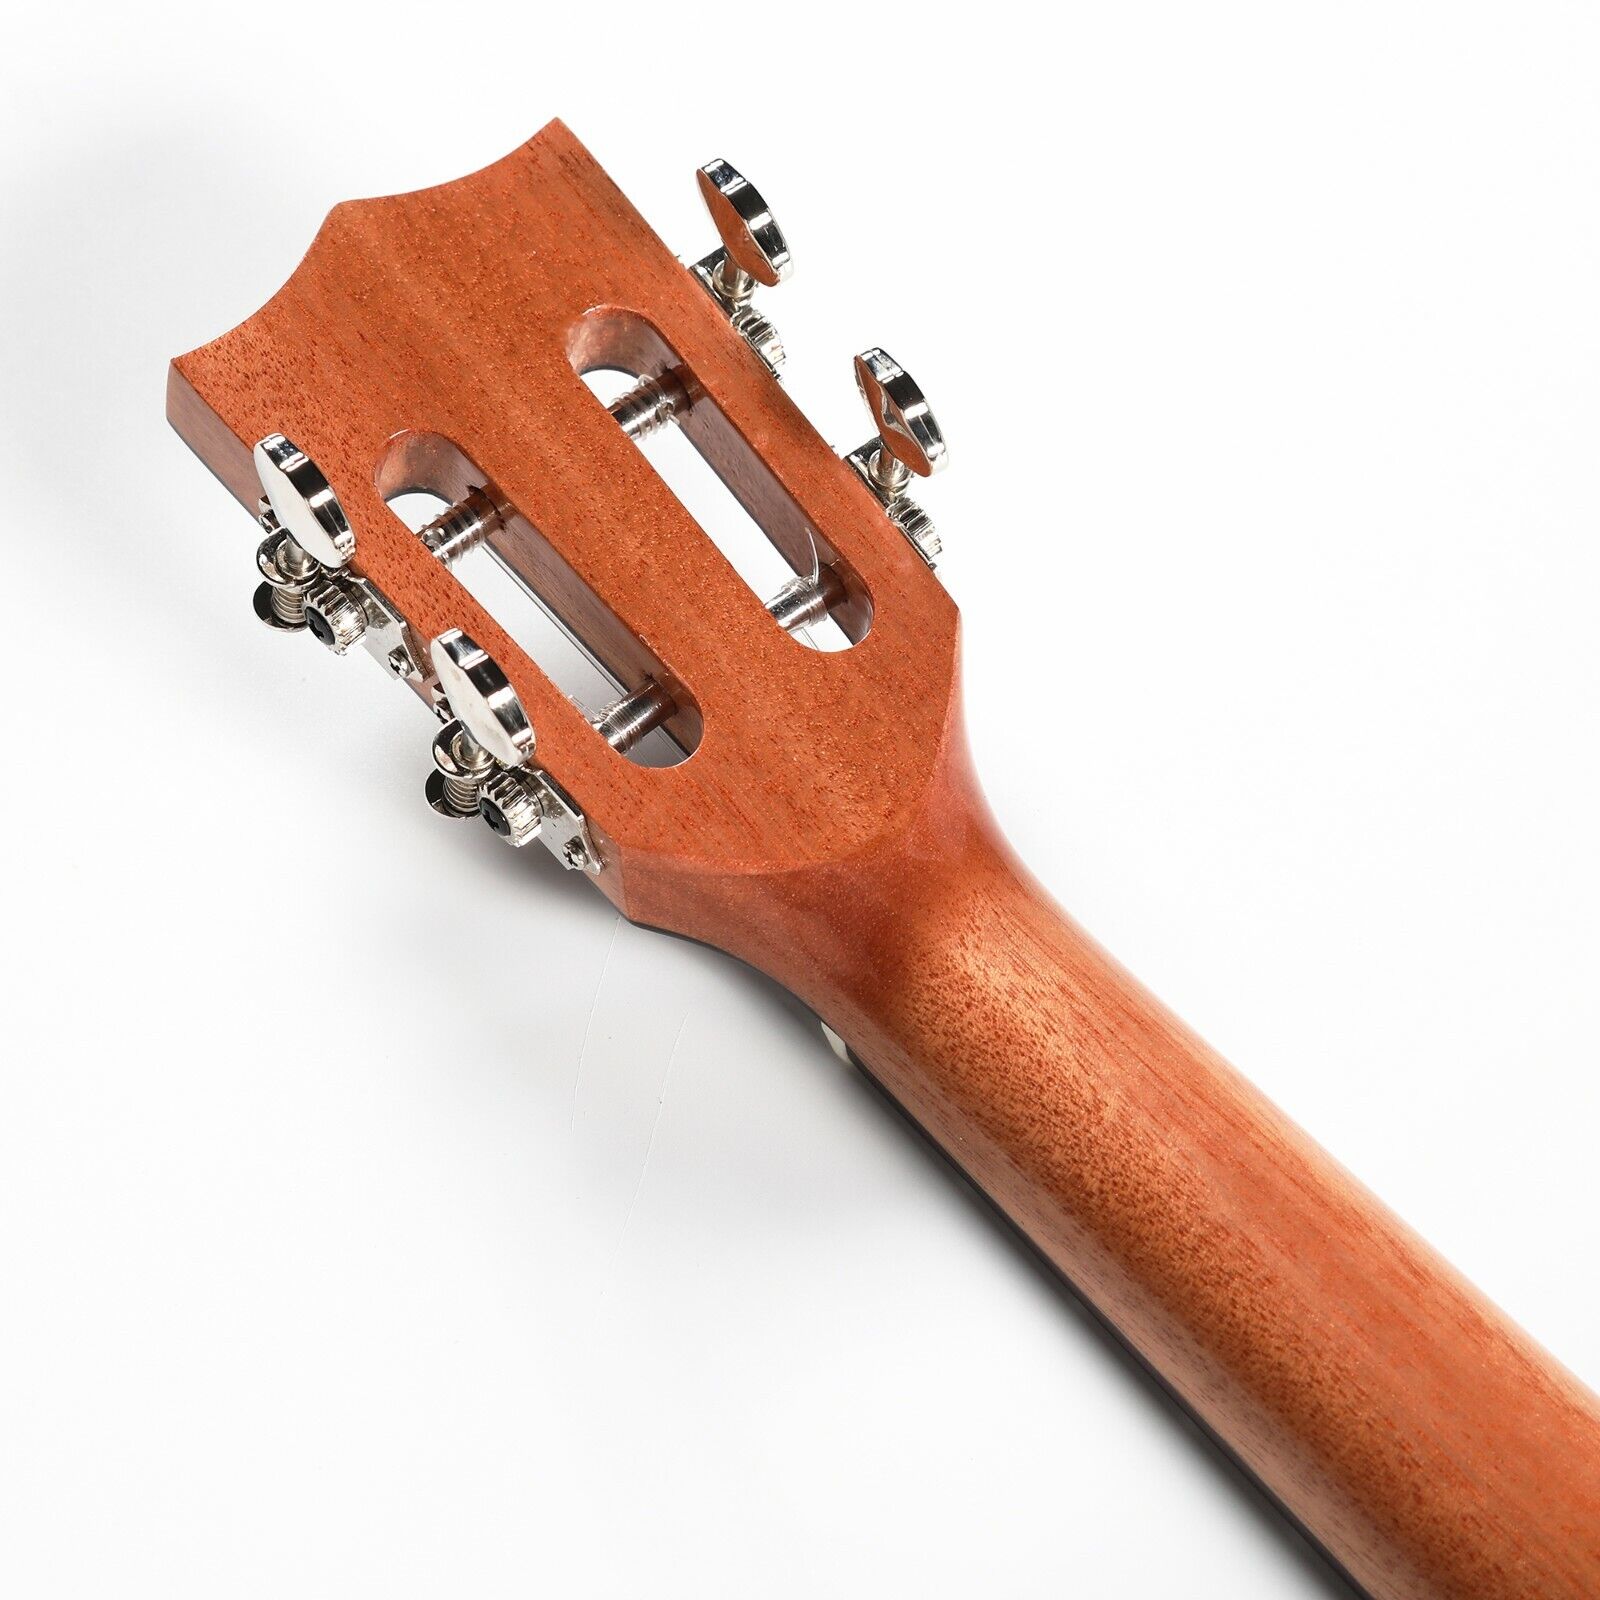 All solid wood 26 inch tenor ukulele ukelele uke guitar with sponge bag 4